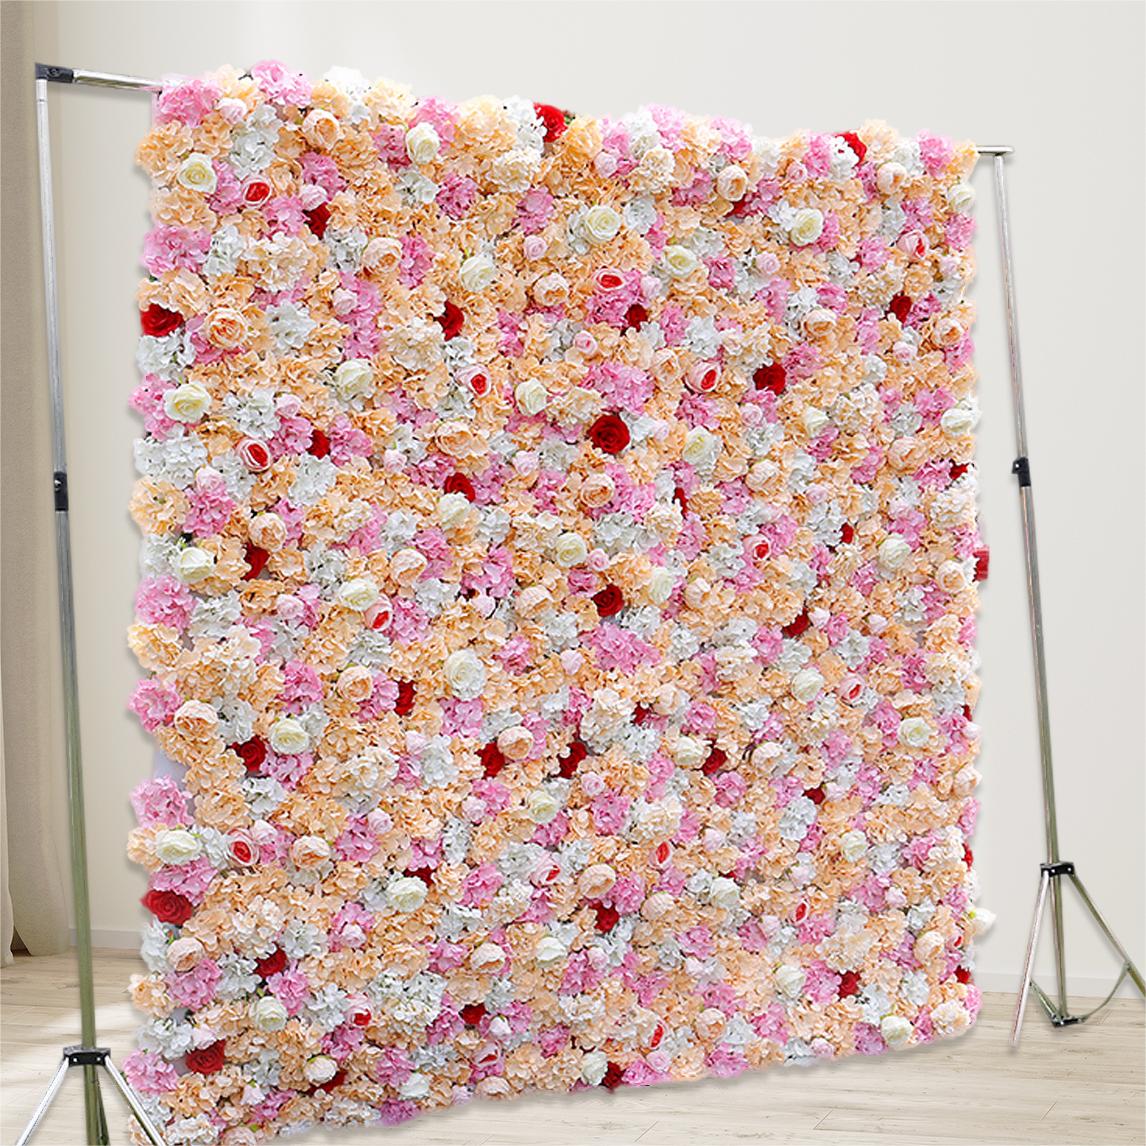 3D Artificial Flower Wall Arrangement Wedding Party Birthday Backdrop Decor HQ3503